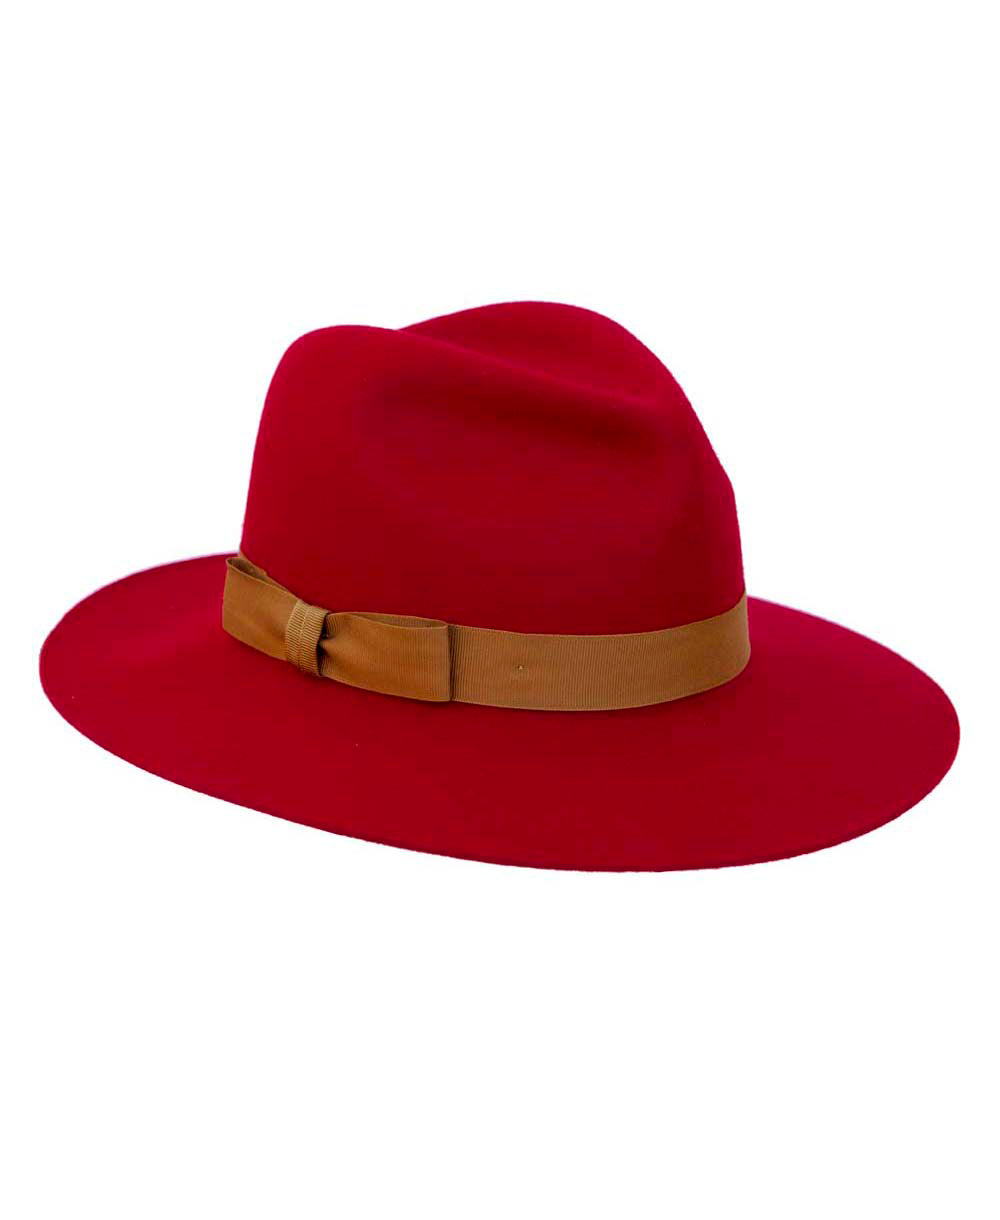 Fur Felt Goodwood Grayson Ladies Hat in Bright Red